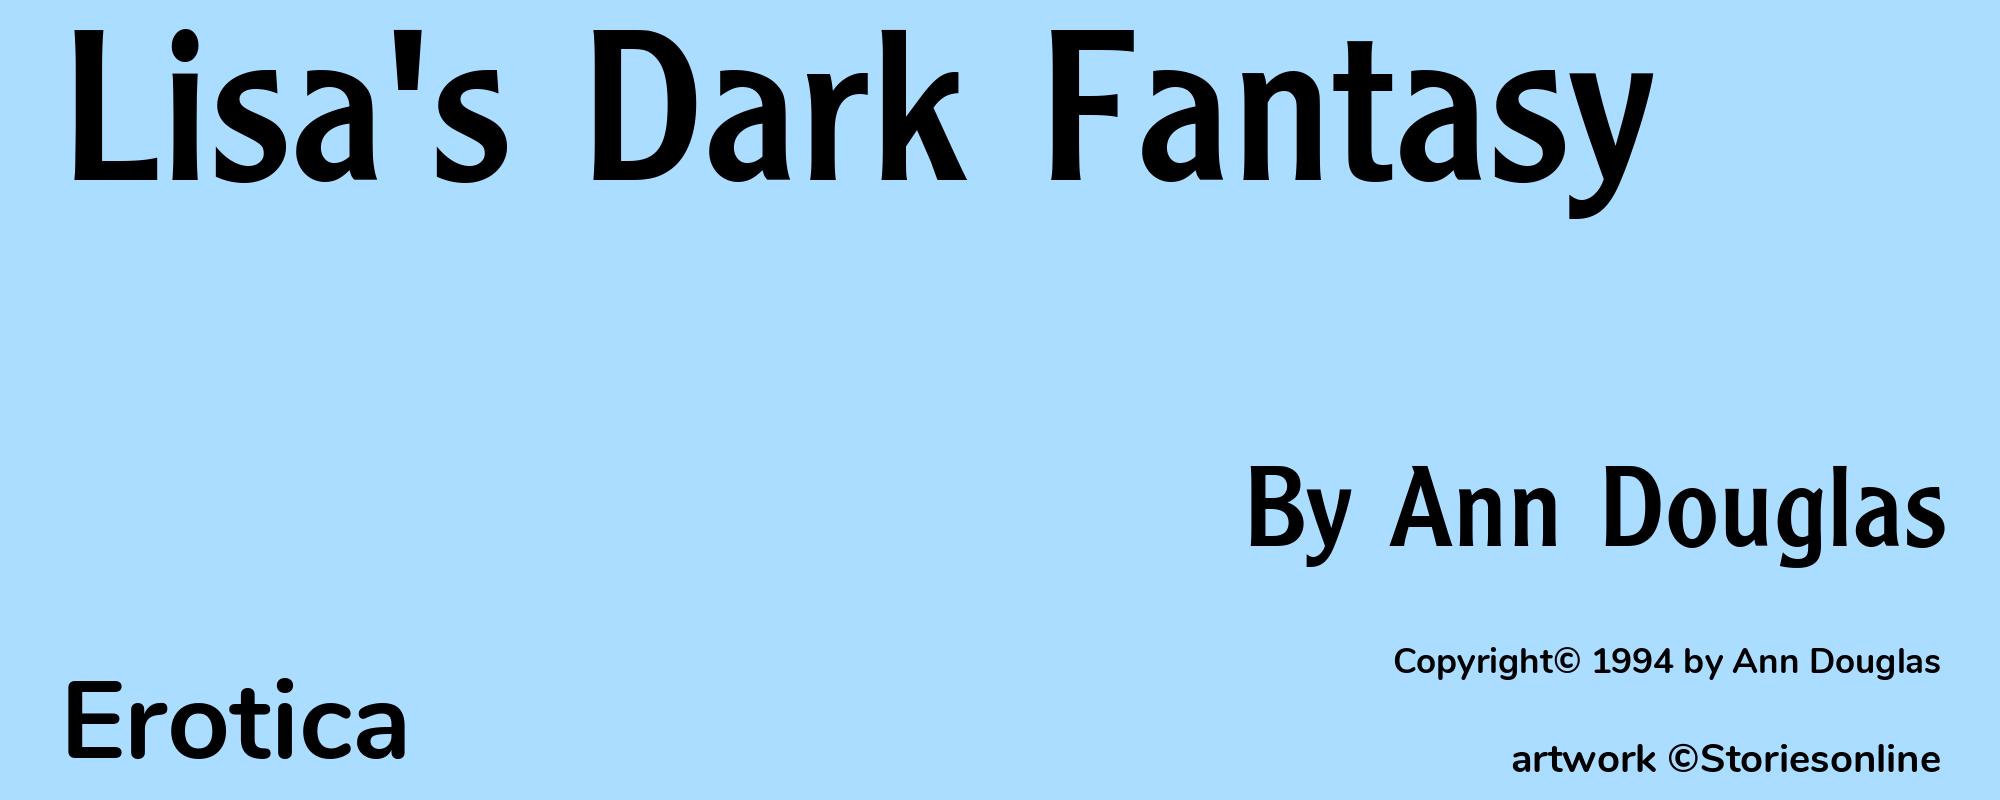 Lisa's Dark Fantasy - Cover